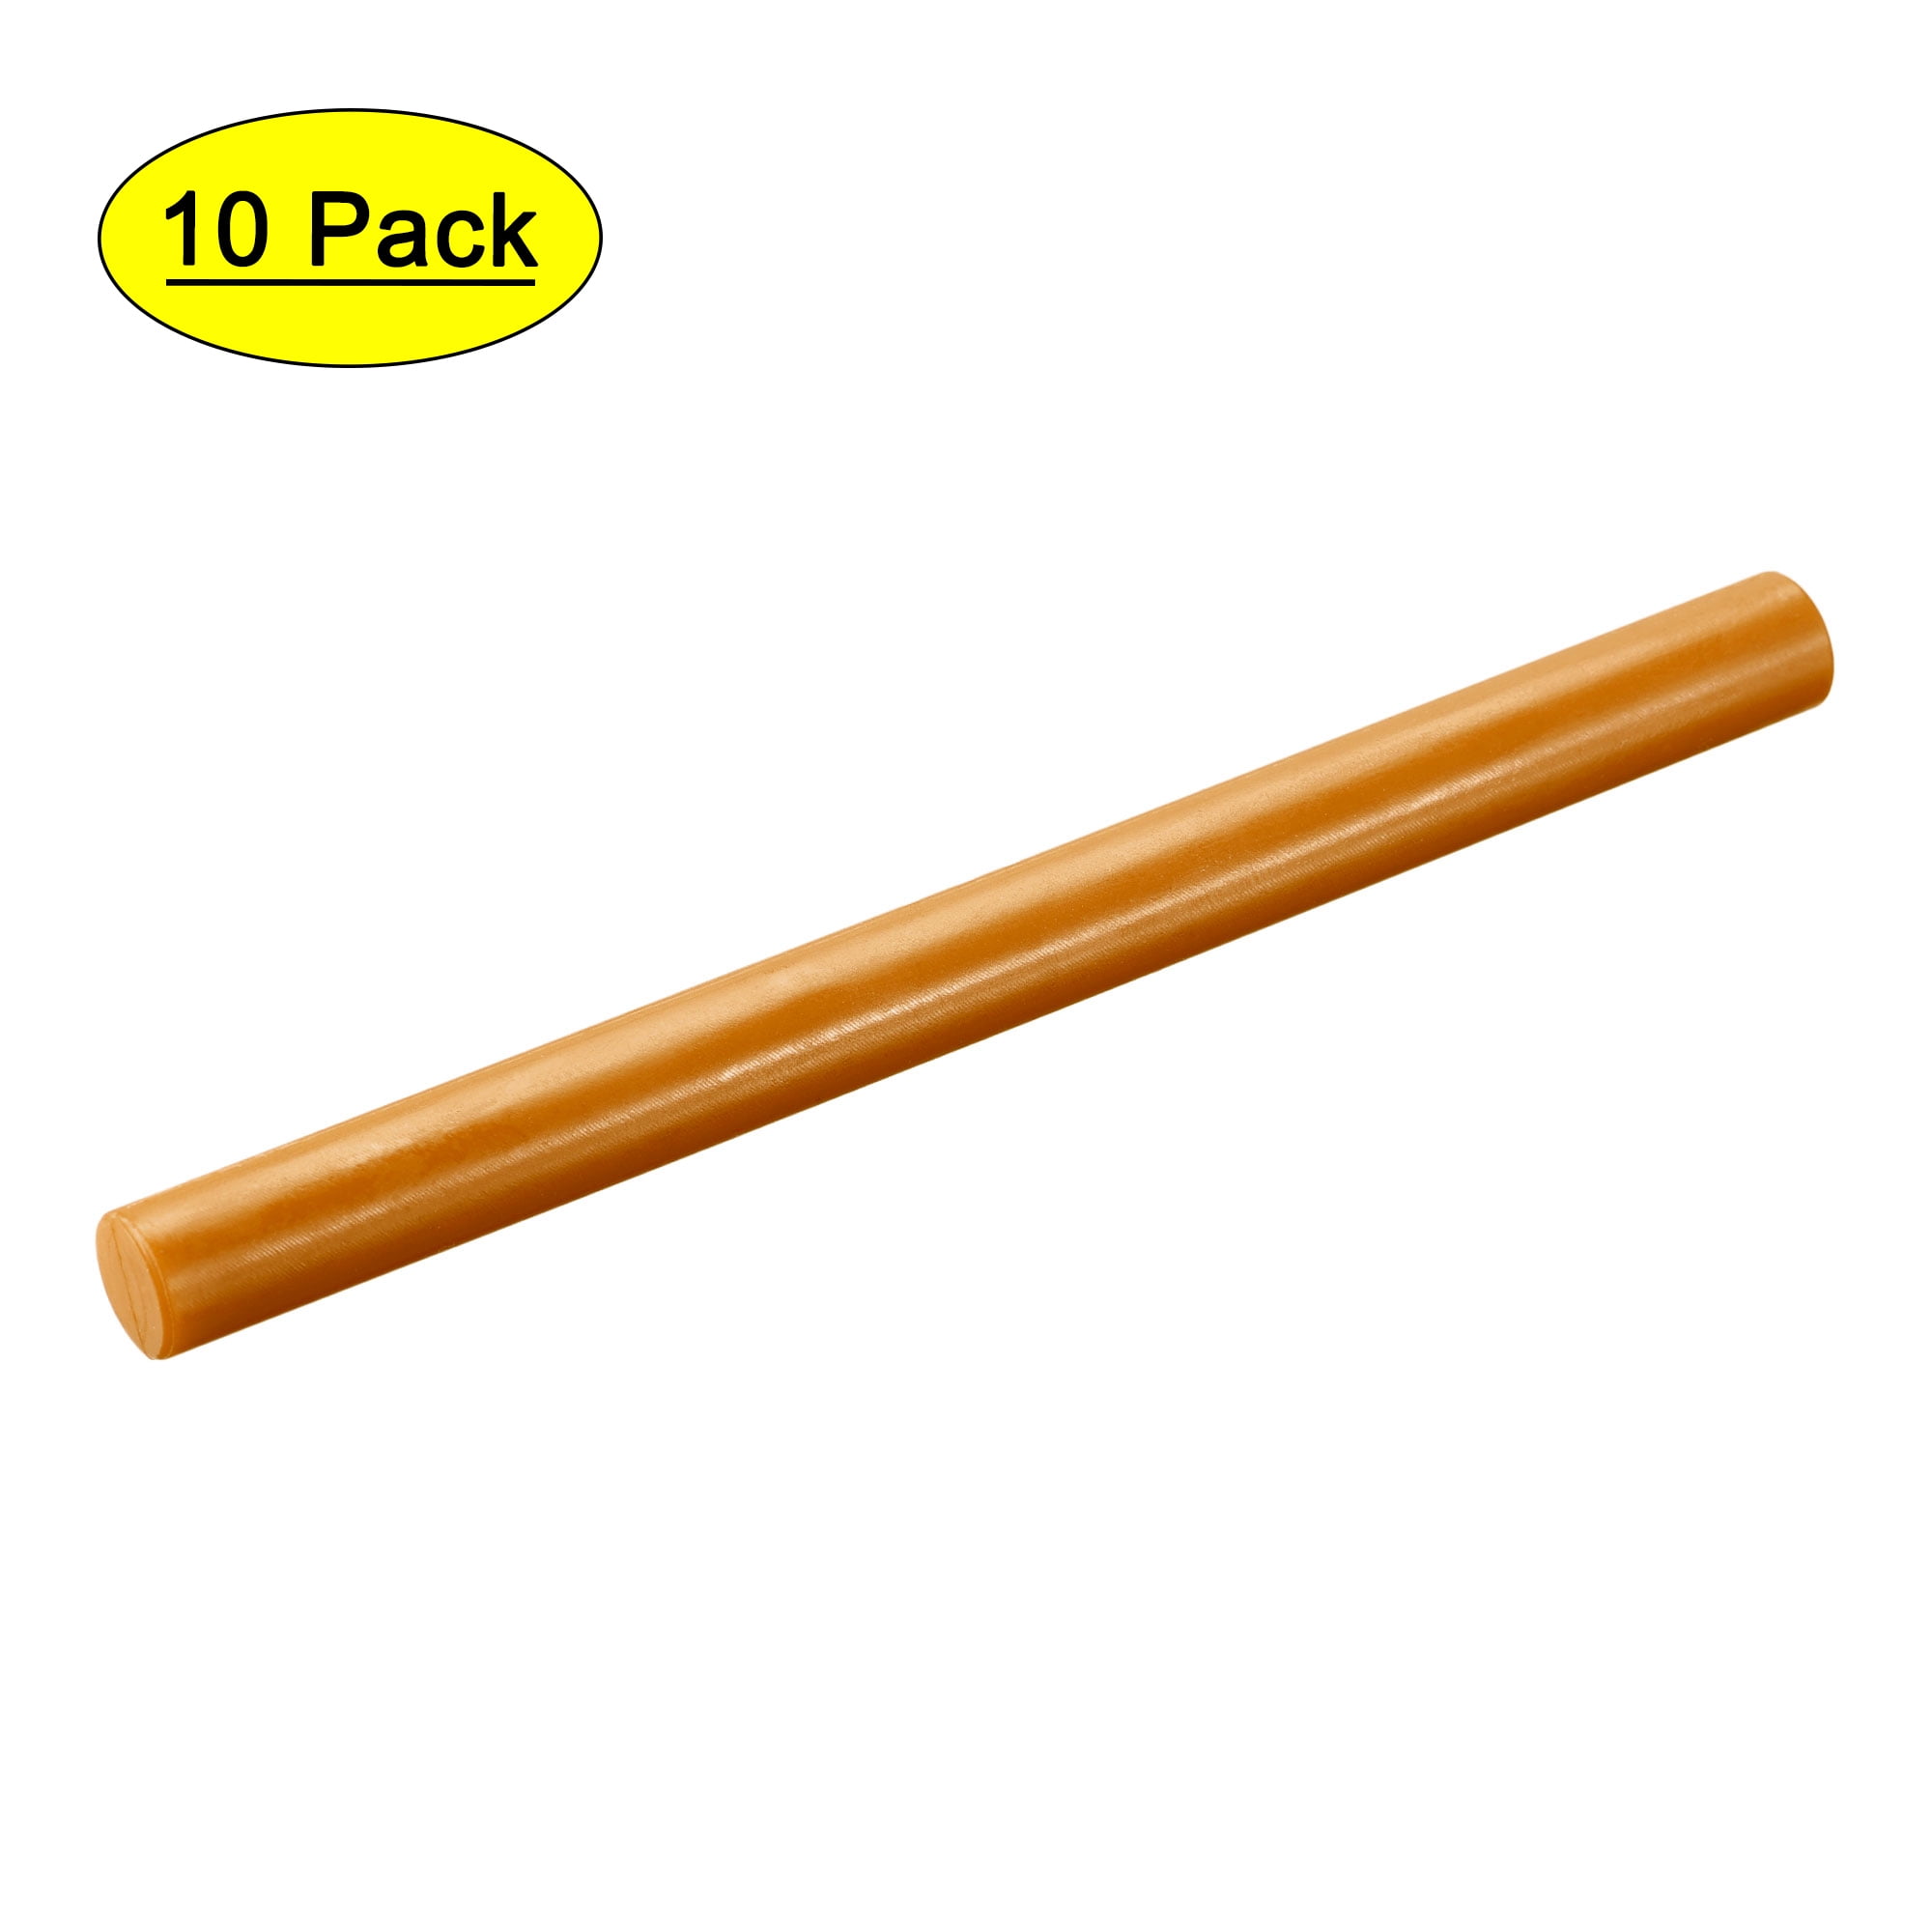 Gold Wax Seal Sticks 10cm 5pk